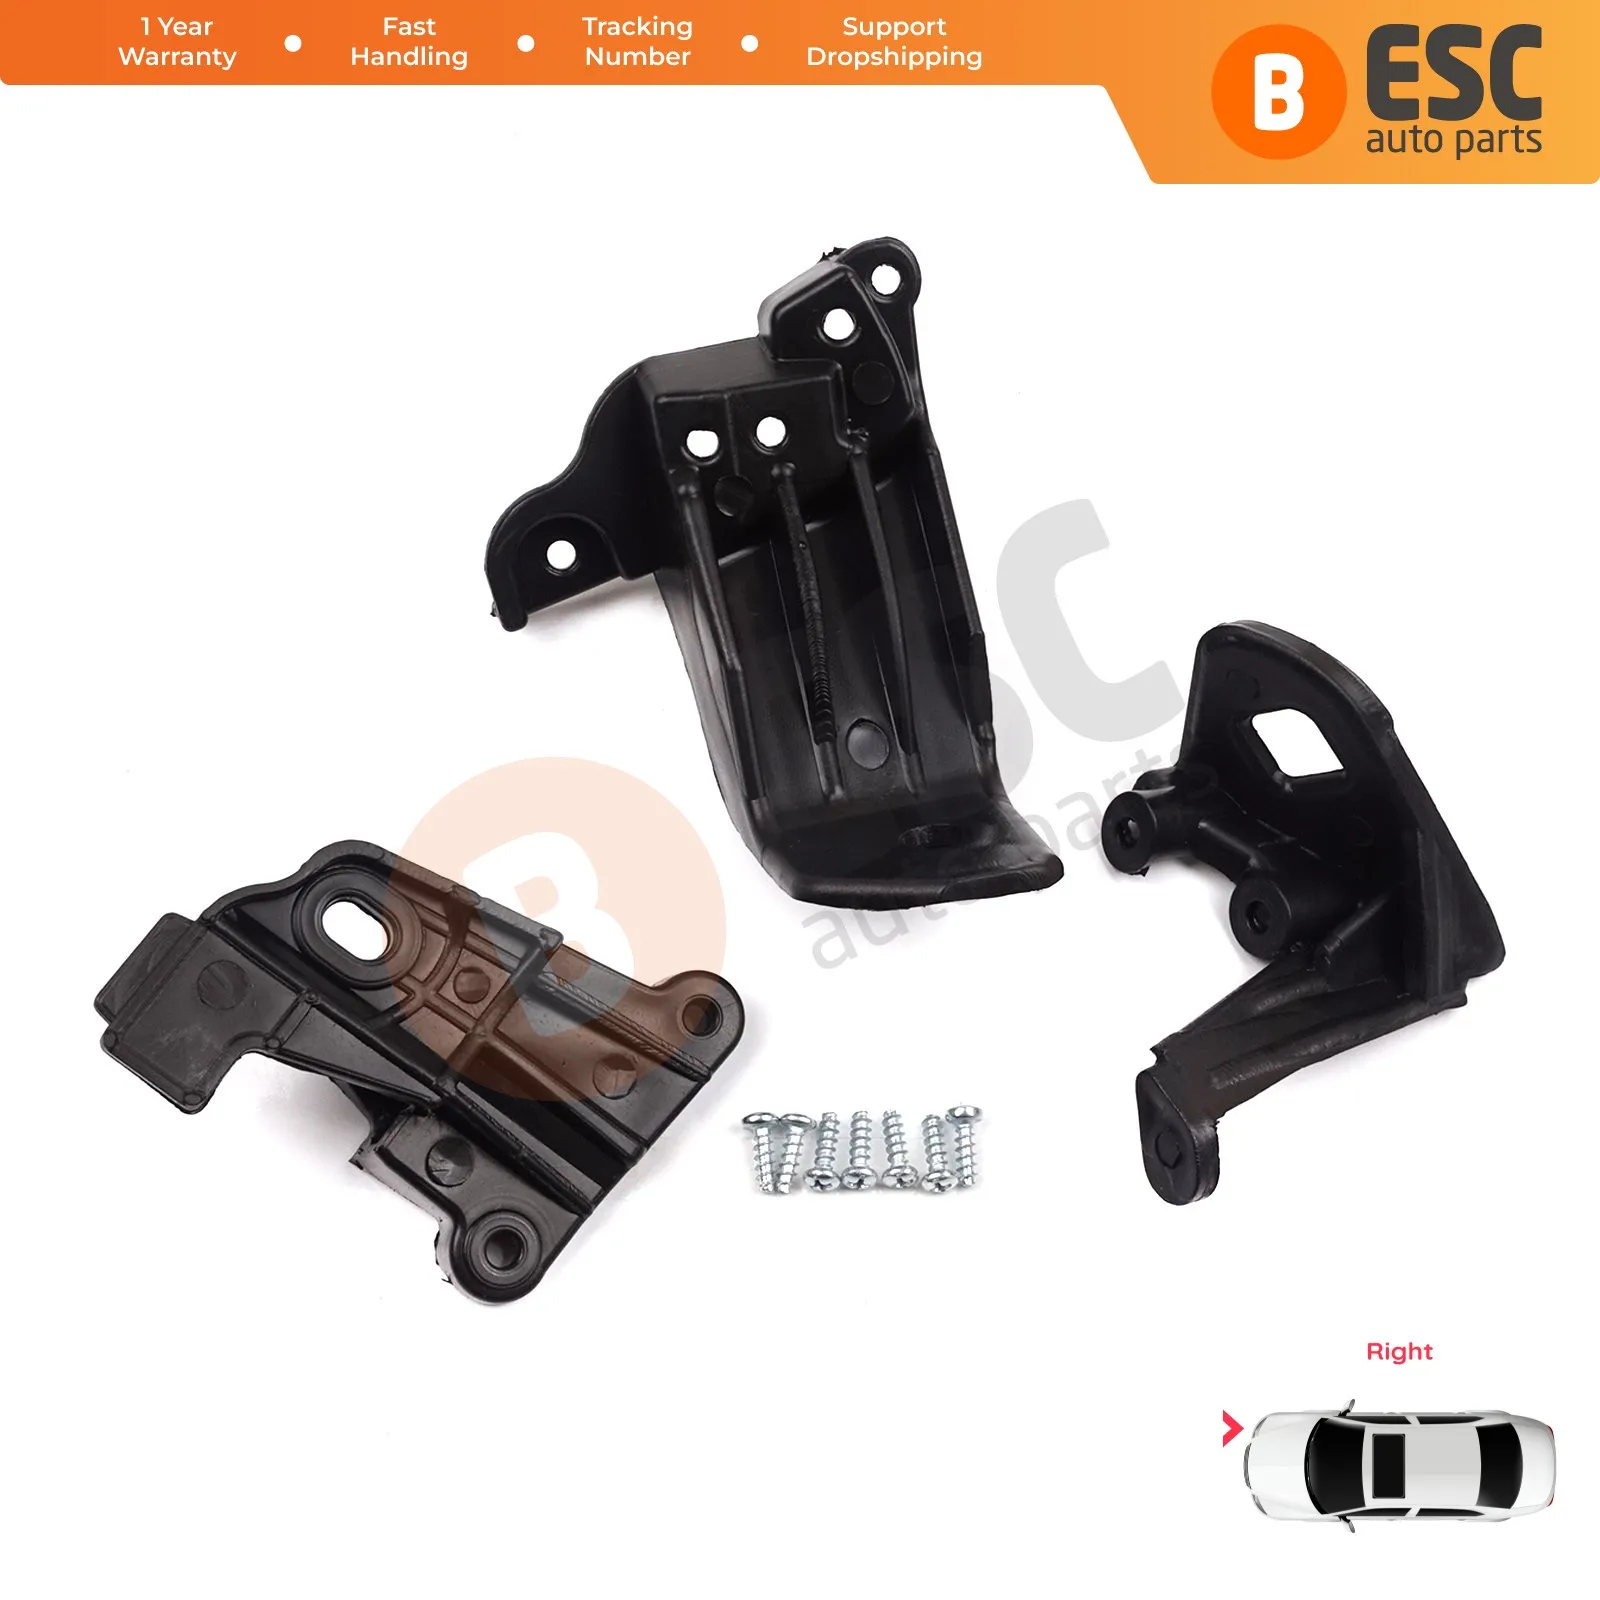 

EHL533 Car Headlight Headlamp Housing Repair Mount Holder Bracket Tab Clips Right Side for Fiat Tipo 356 Egea 2015-On 50927929